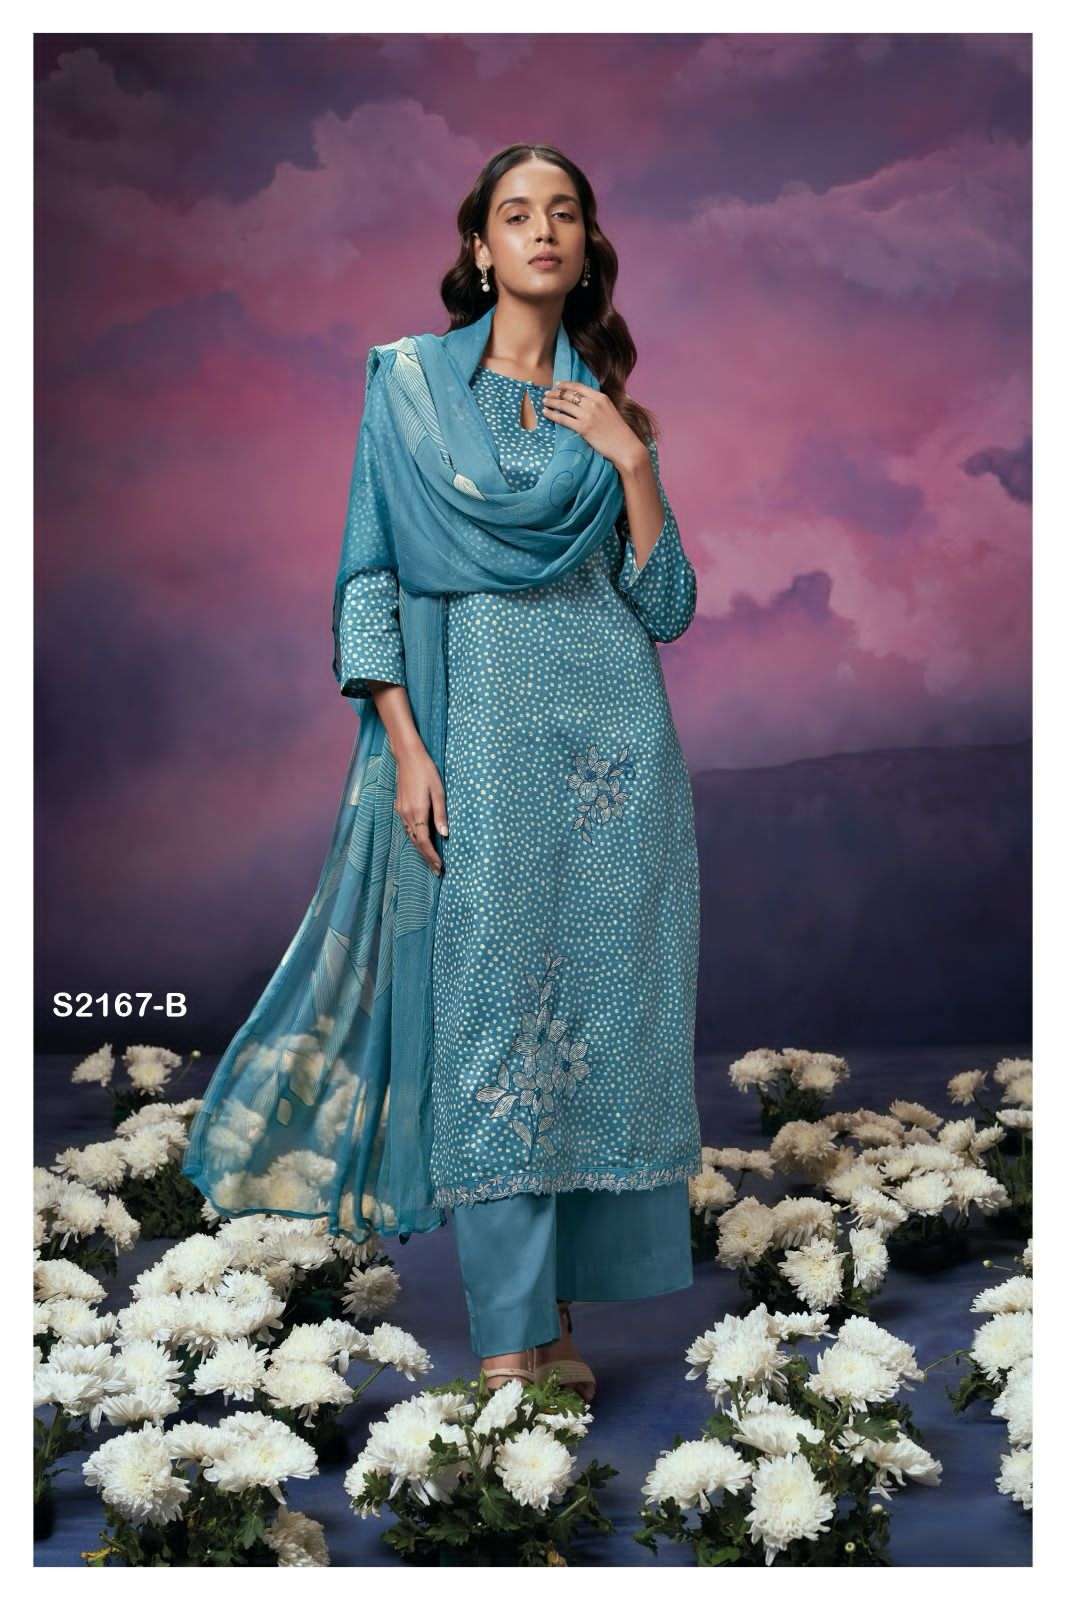 ganga elsie 2167 colour series designer  pakistani salwar kameez wholesaler surat gujarat